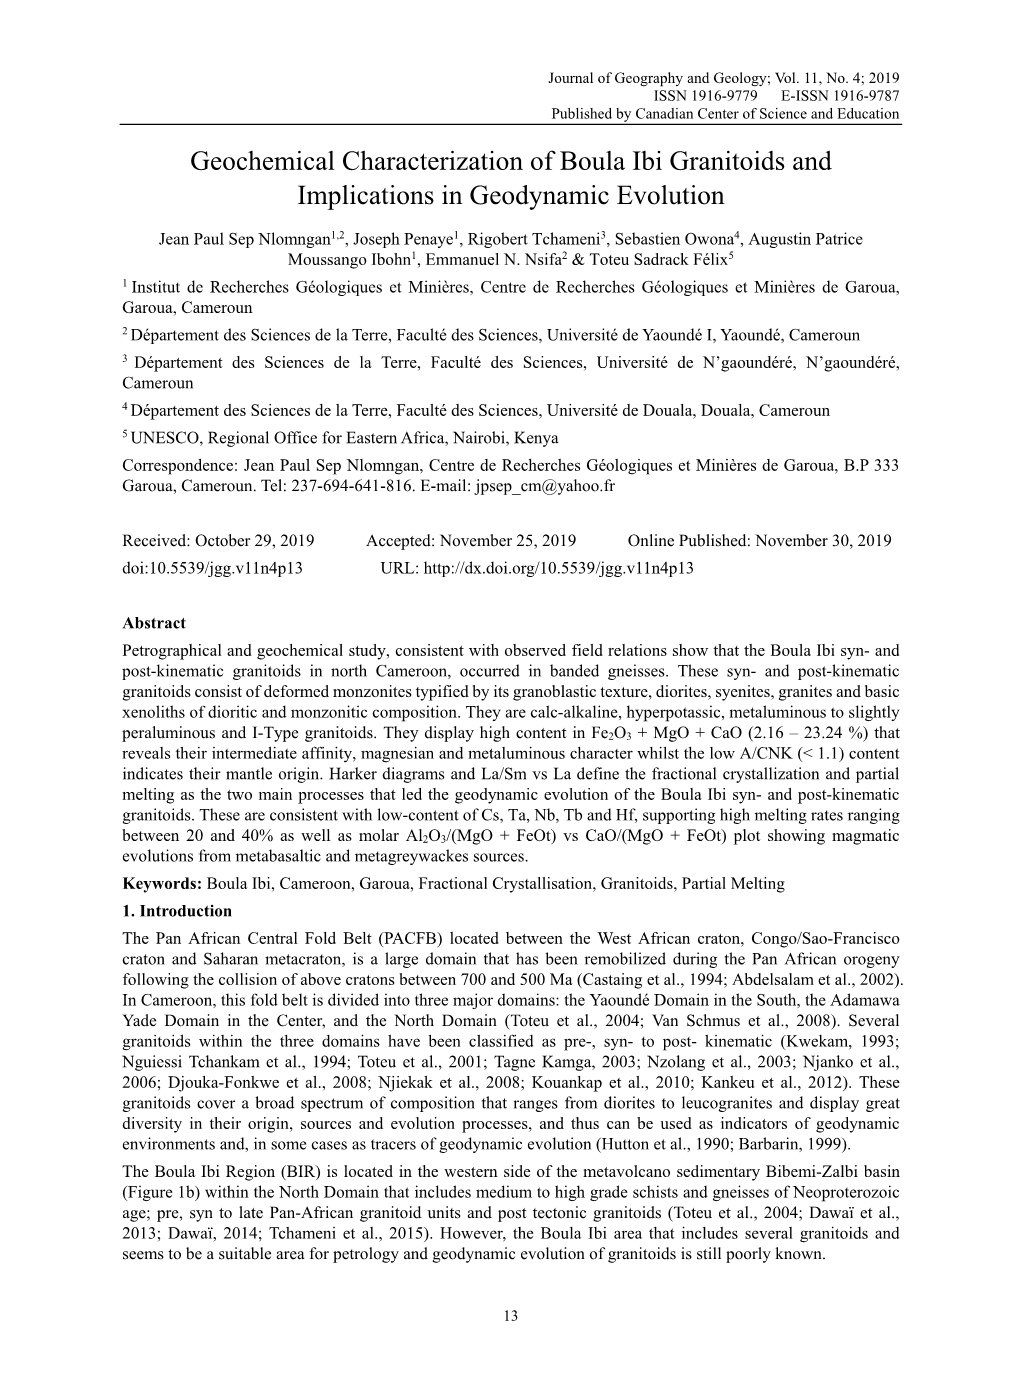 Geochemical Characterization of Boula Ibi Granitoids and Implications in Geodynamic Evolution